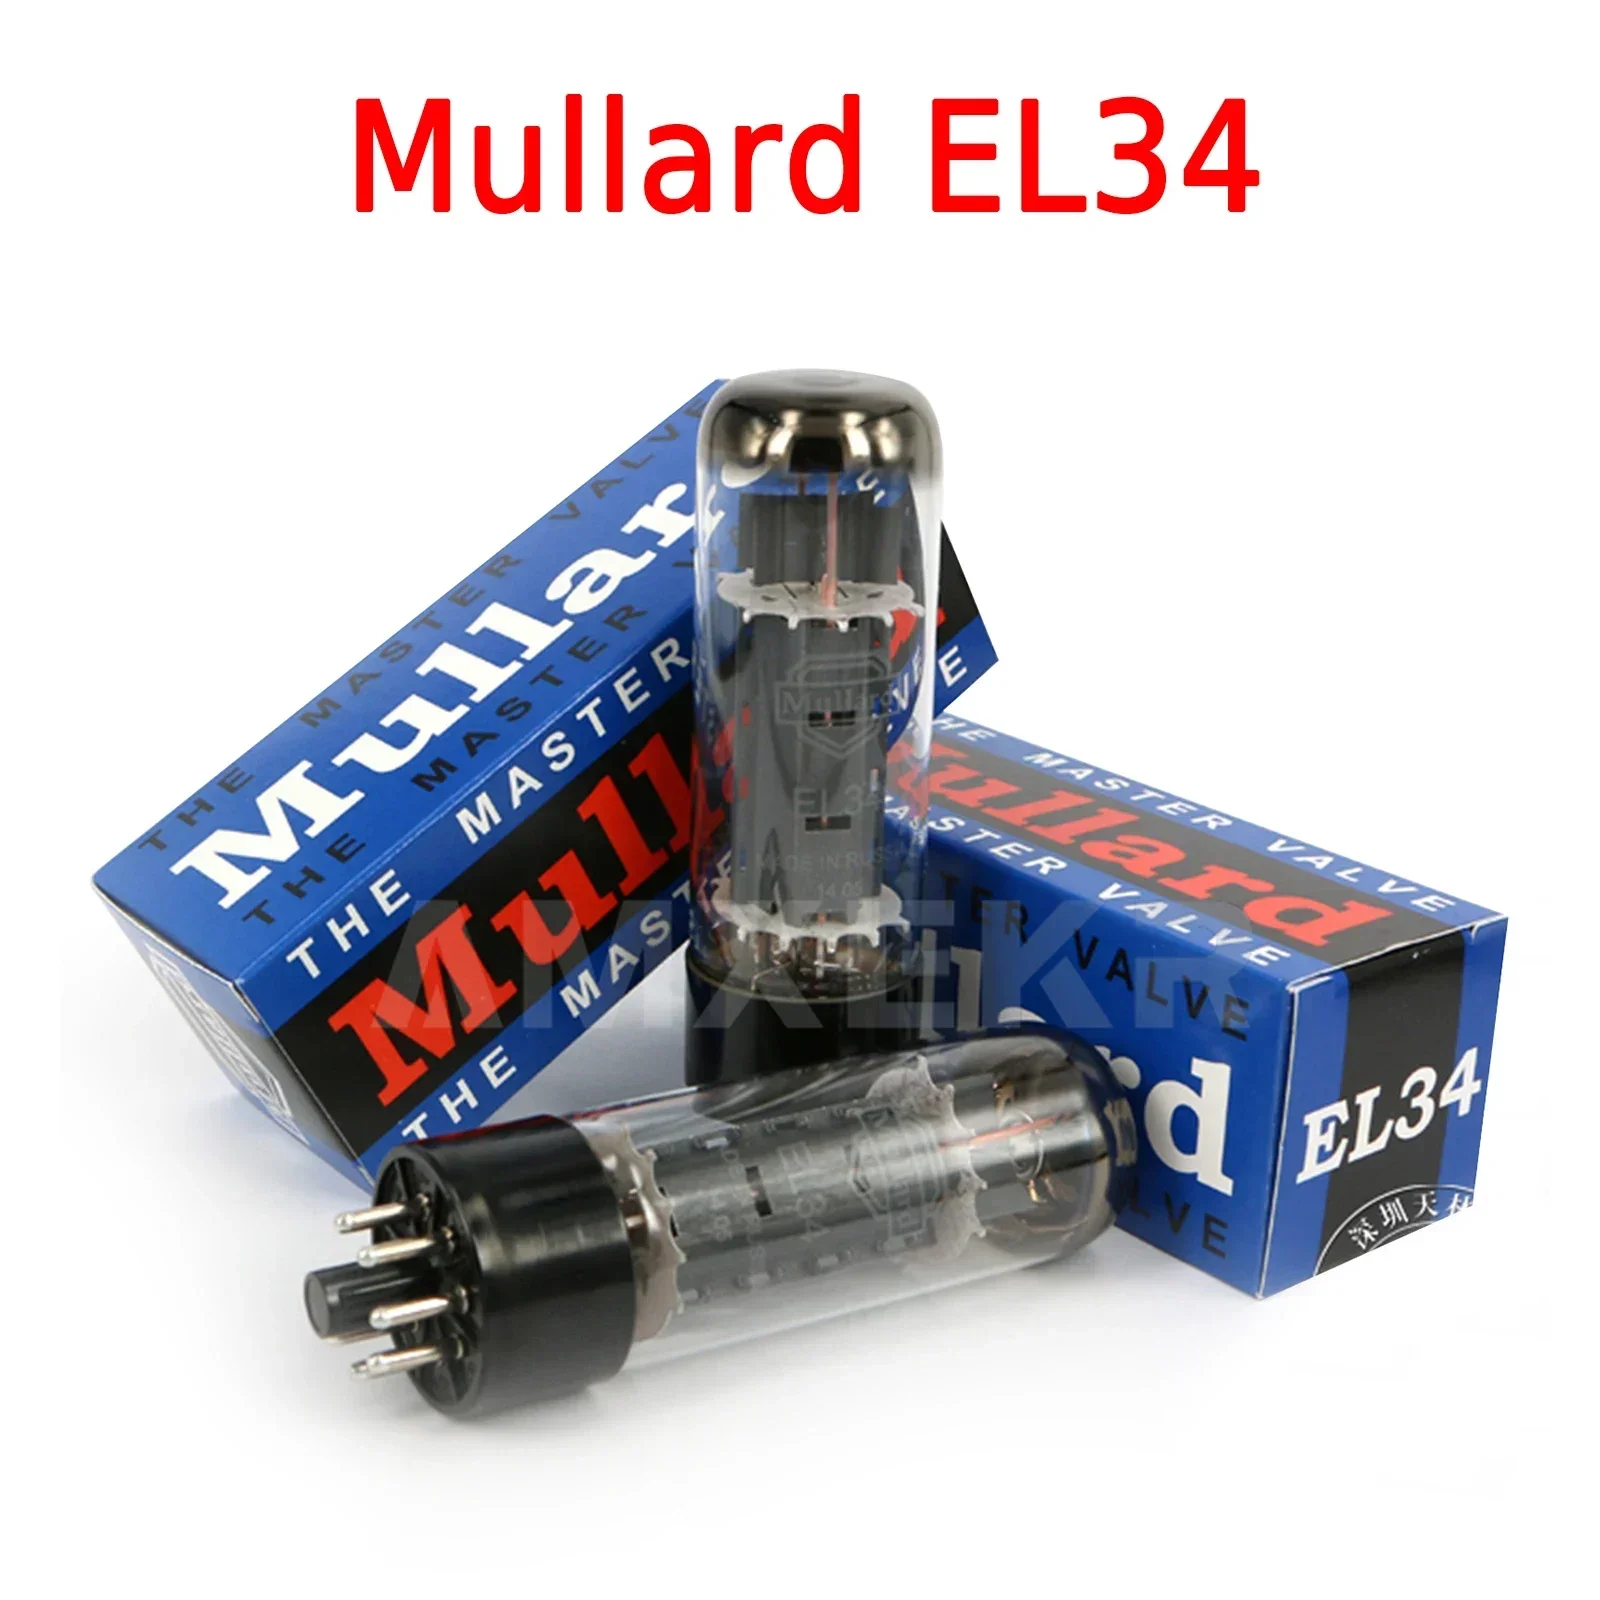 

Mullard EL34 Vacuum Tube Replace 6CA7 Kt77 KT90 5881 6P3P Electronic Tube Amplifier Kit DIY Audio Valve Factory Test and Match